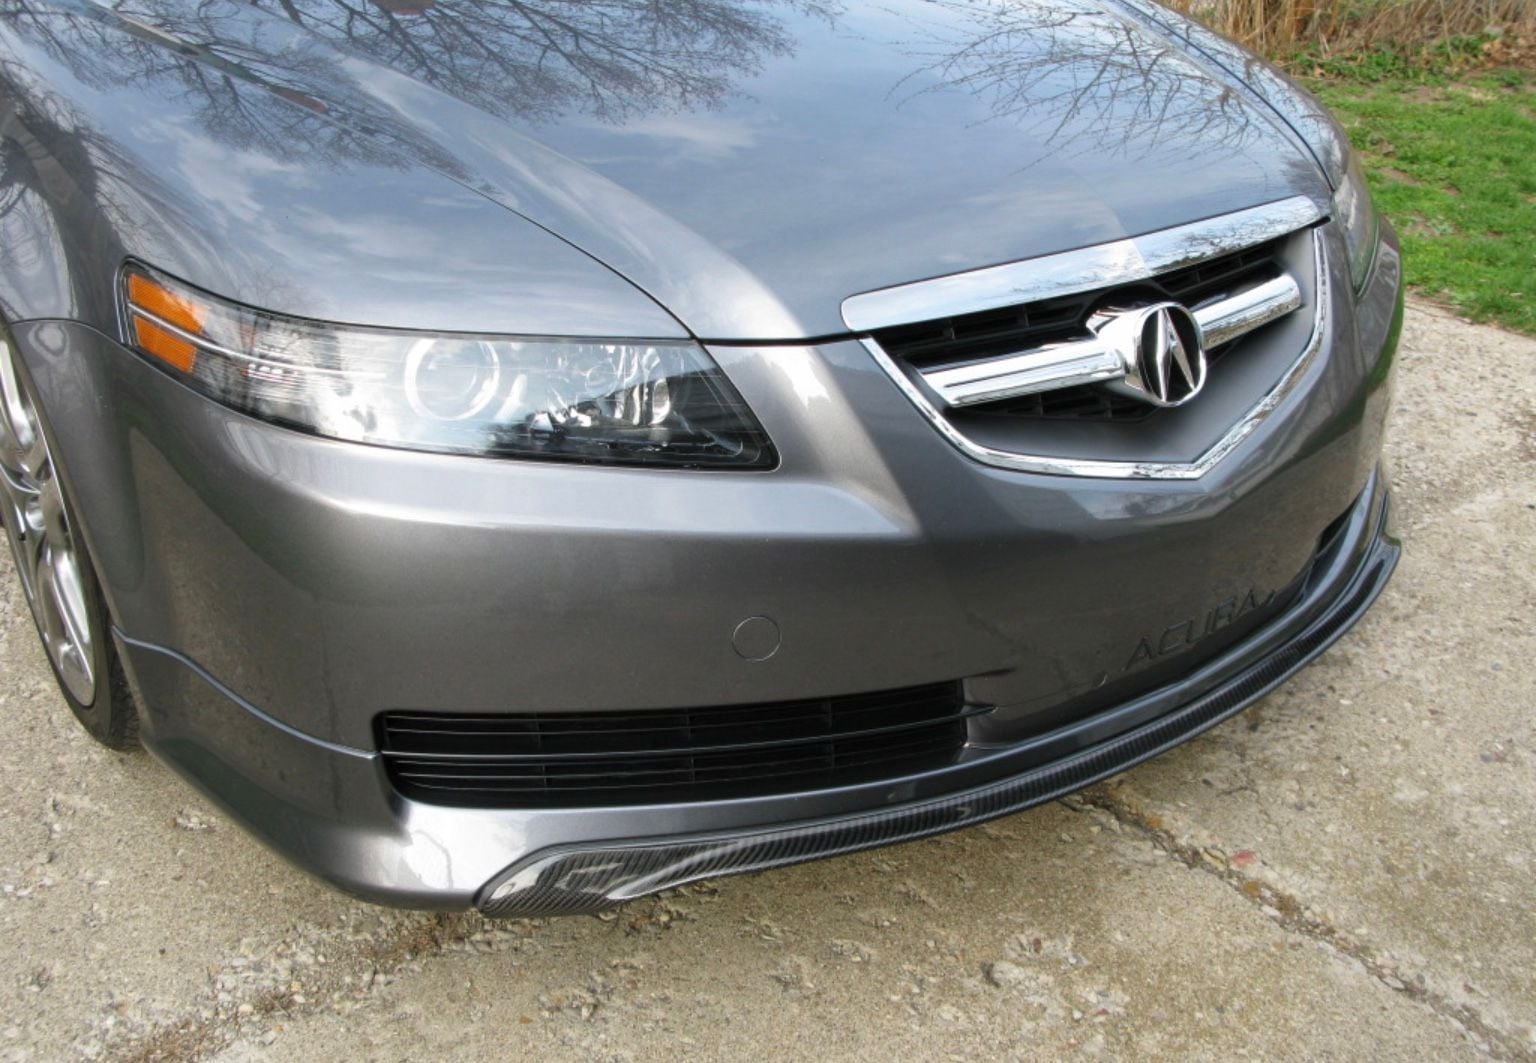 2008 Acura TL - 04-06 KB1 Carbon Fiber Front Lip Add On - Exterior Body Parts - $425 - Rockford, IL 61103, United States